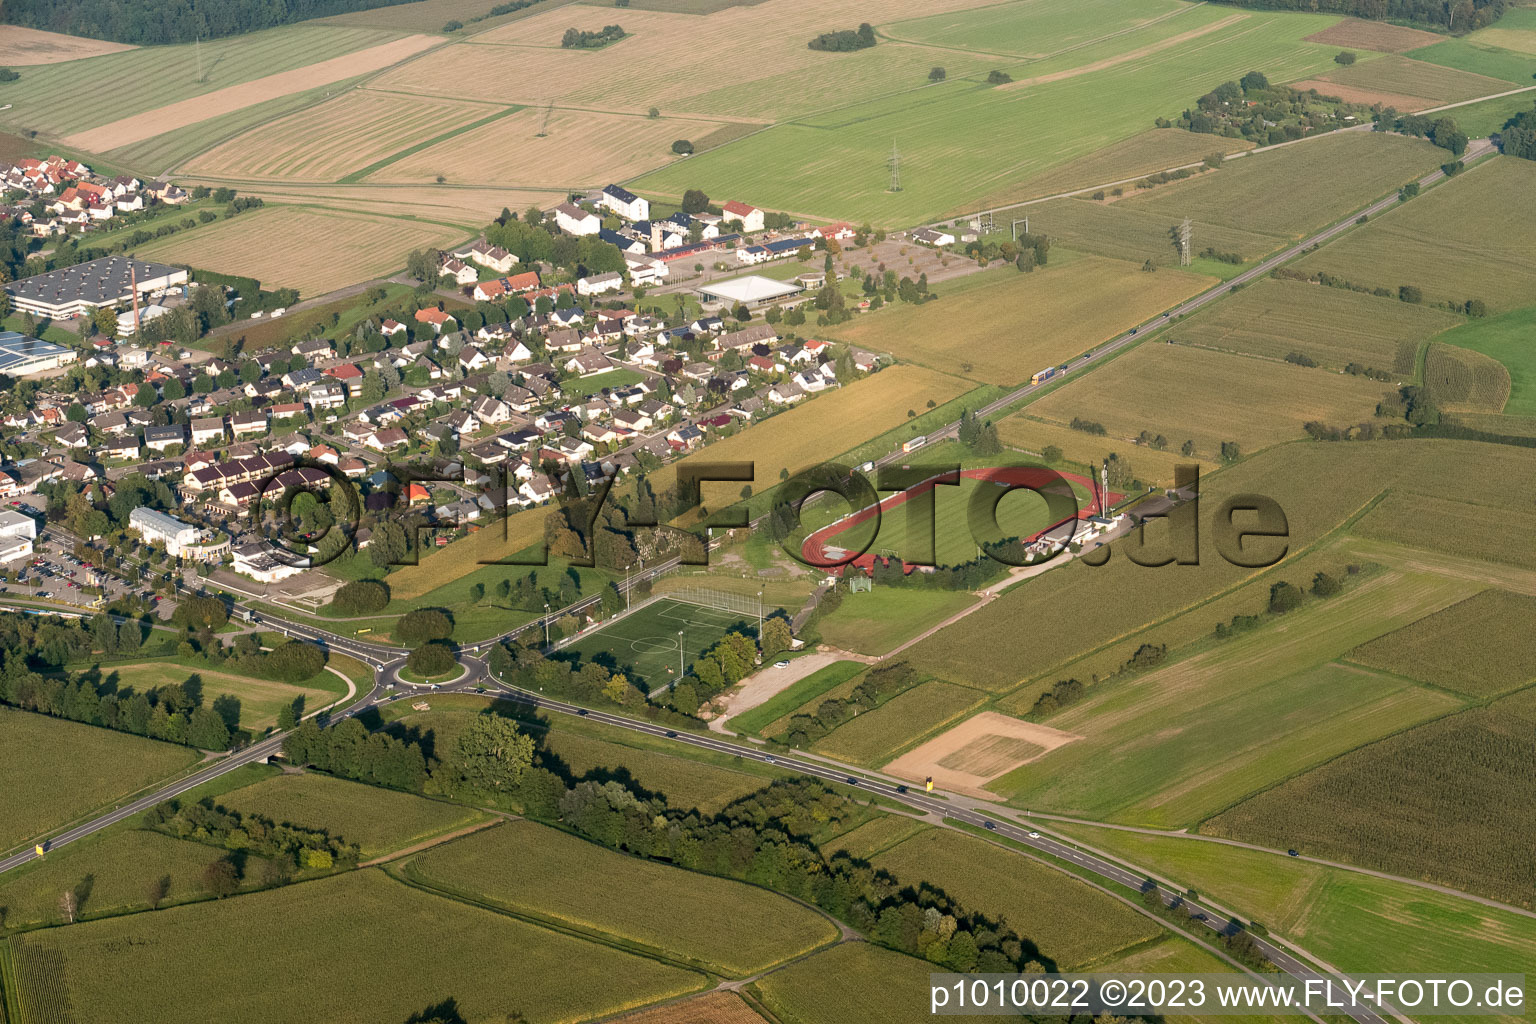 District Rheinbischofsheim in Rheinau in the state Baden-Wuerttemberg, Germany seen from a drone